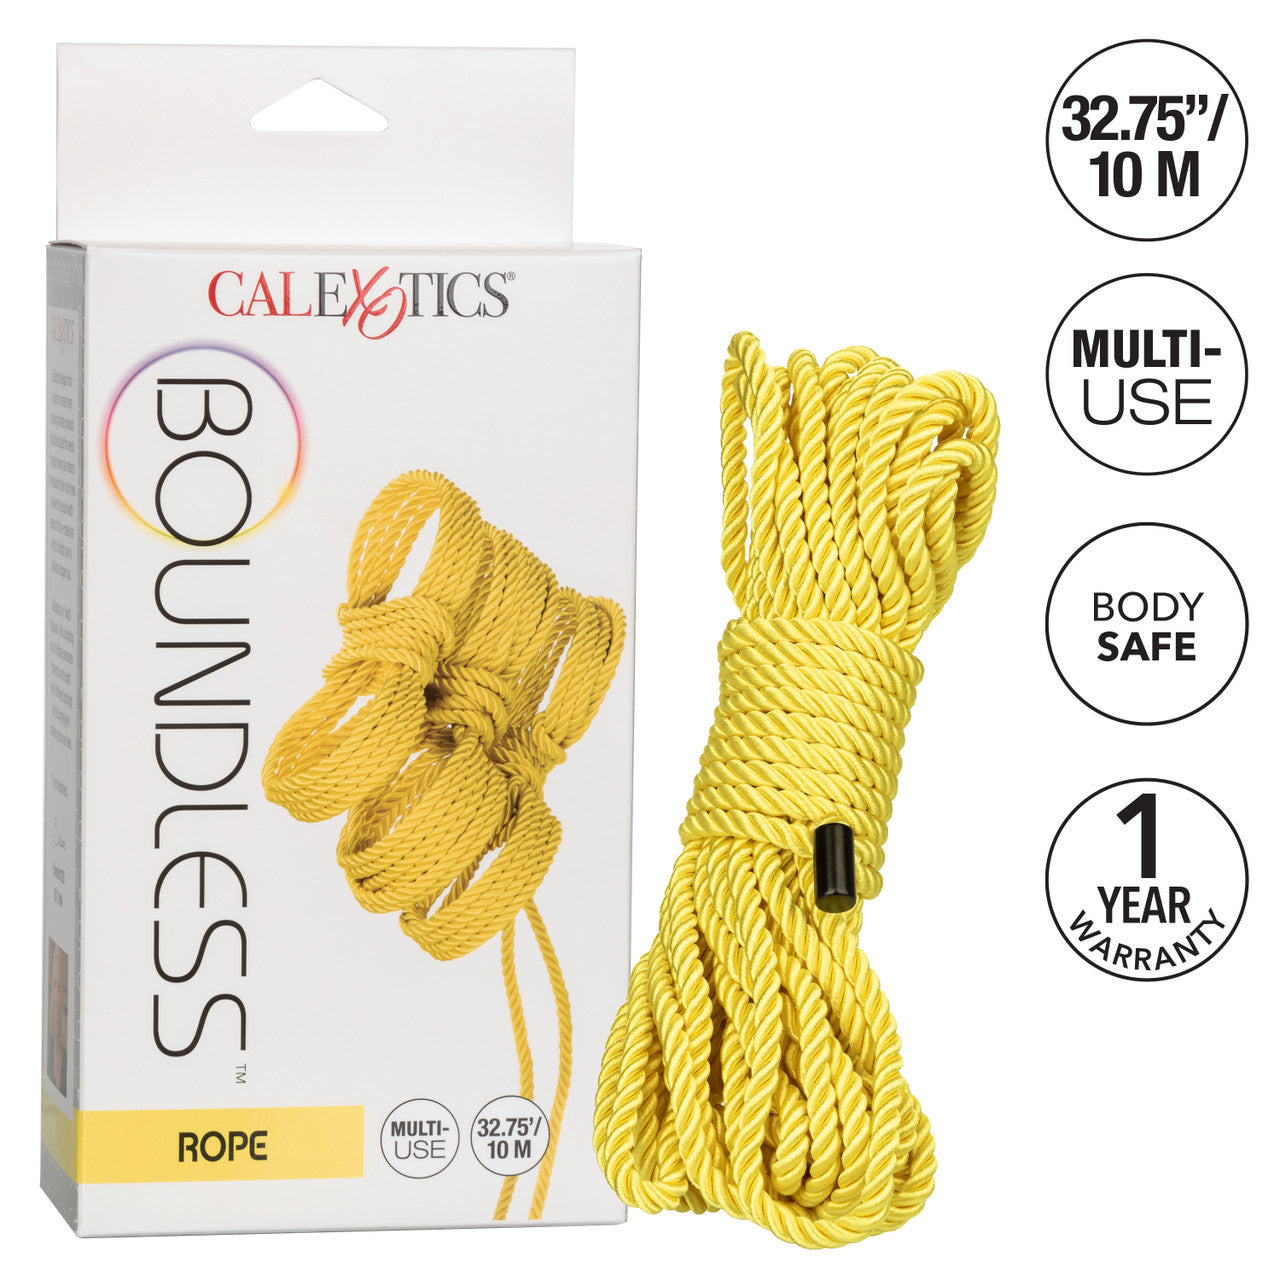 yellow bondage rope with white box